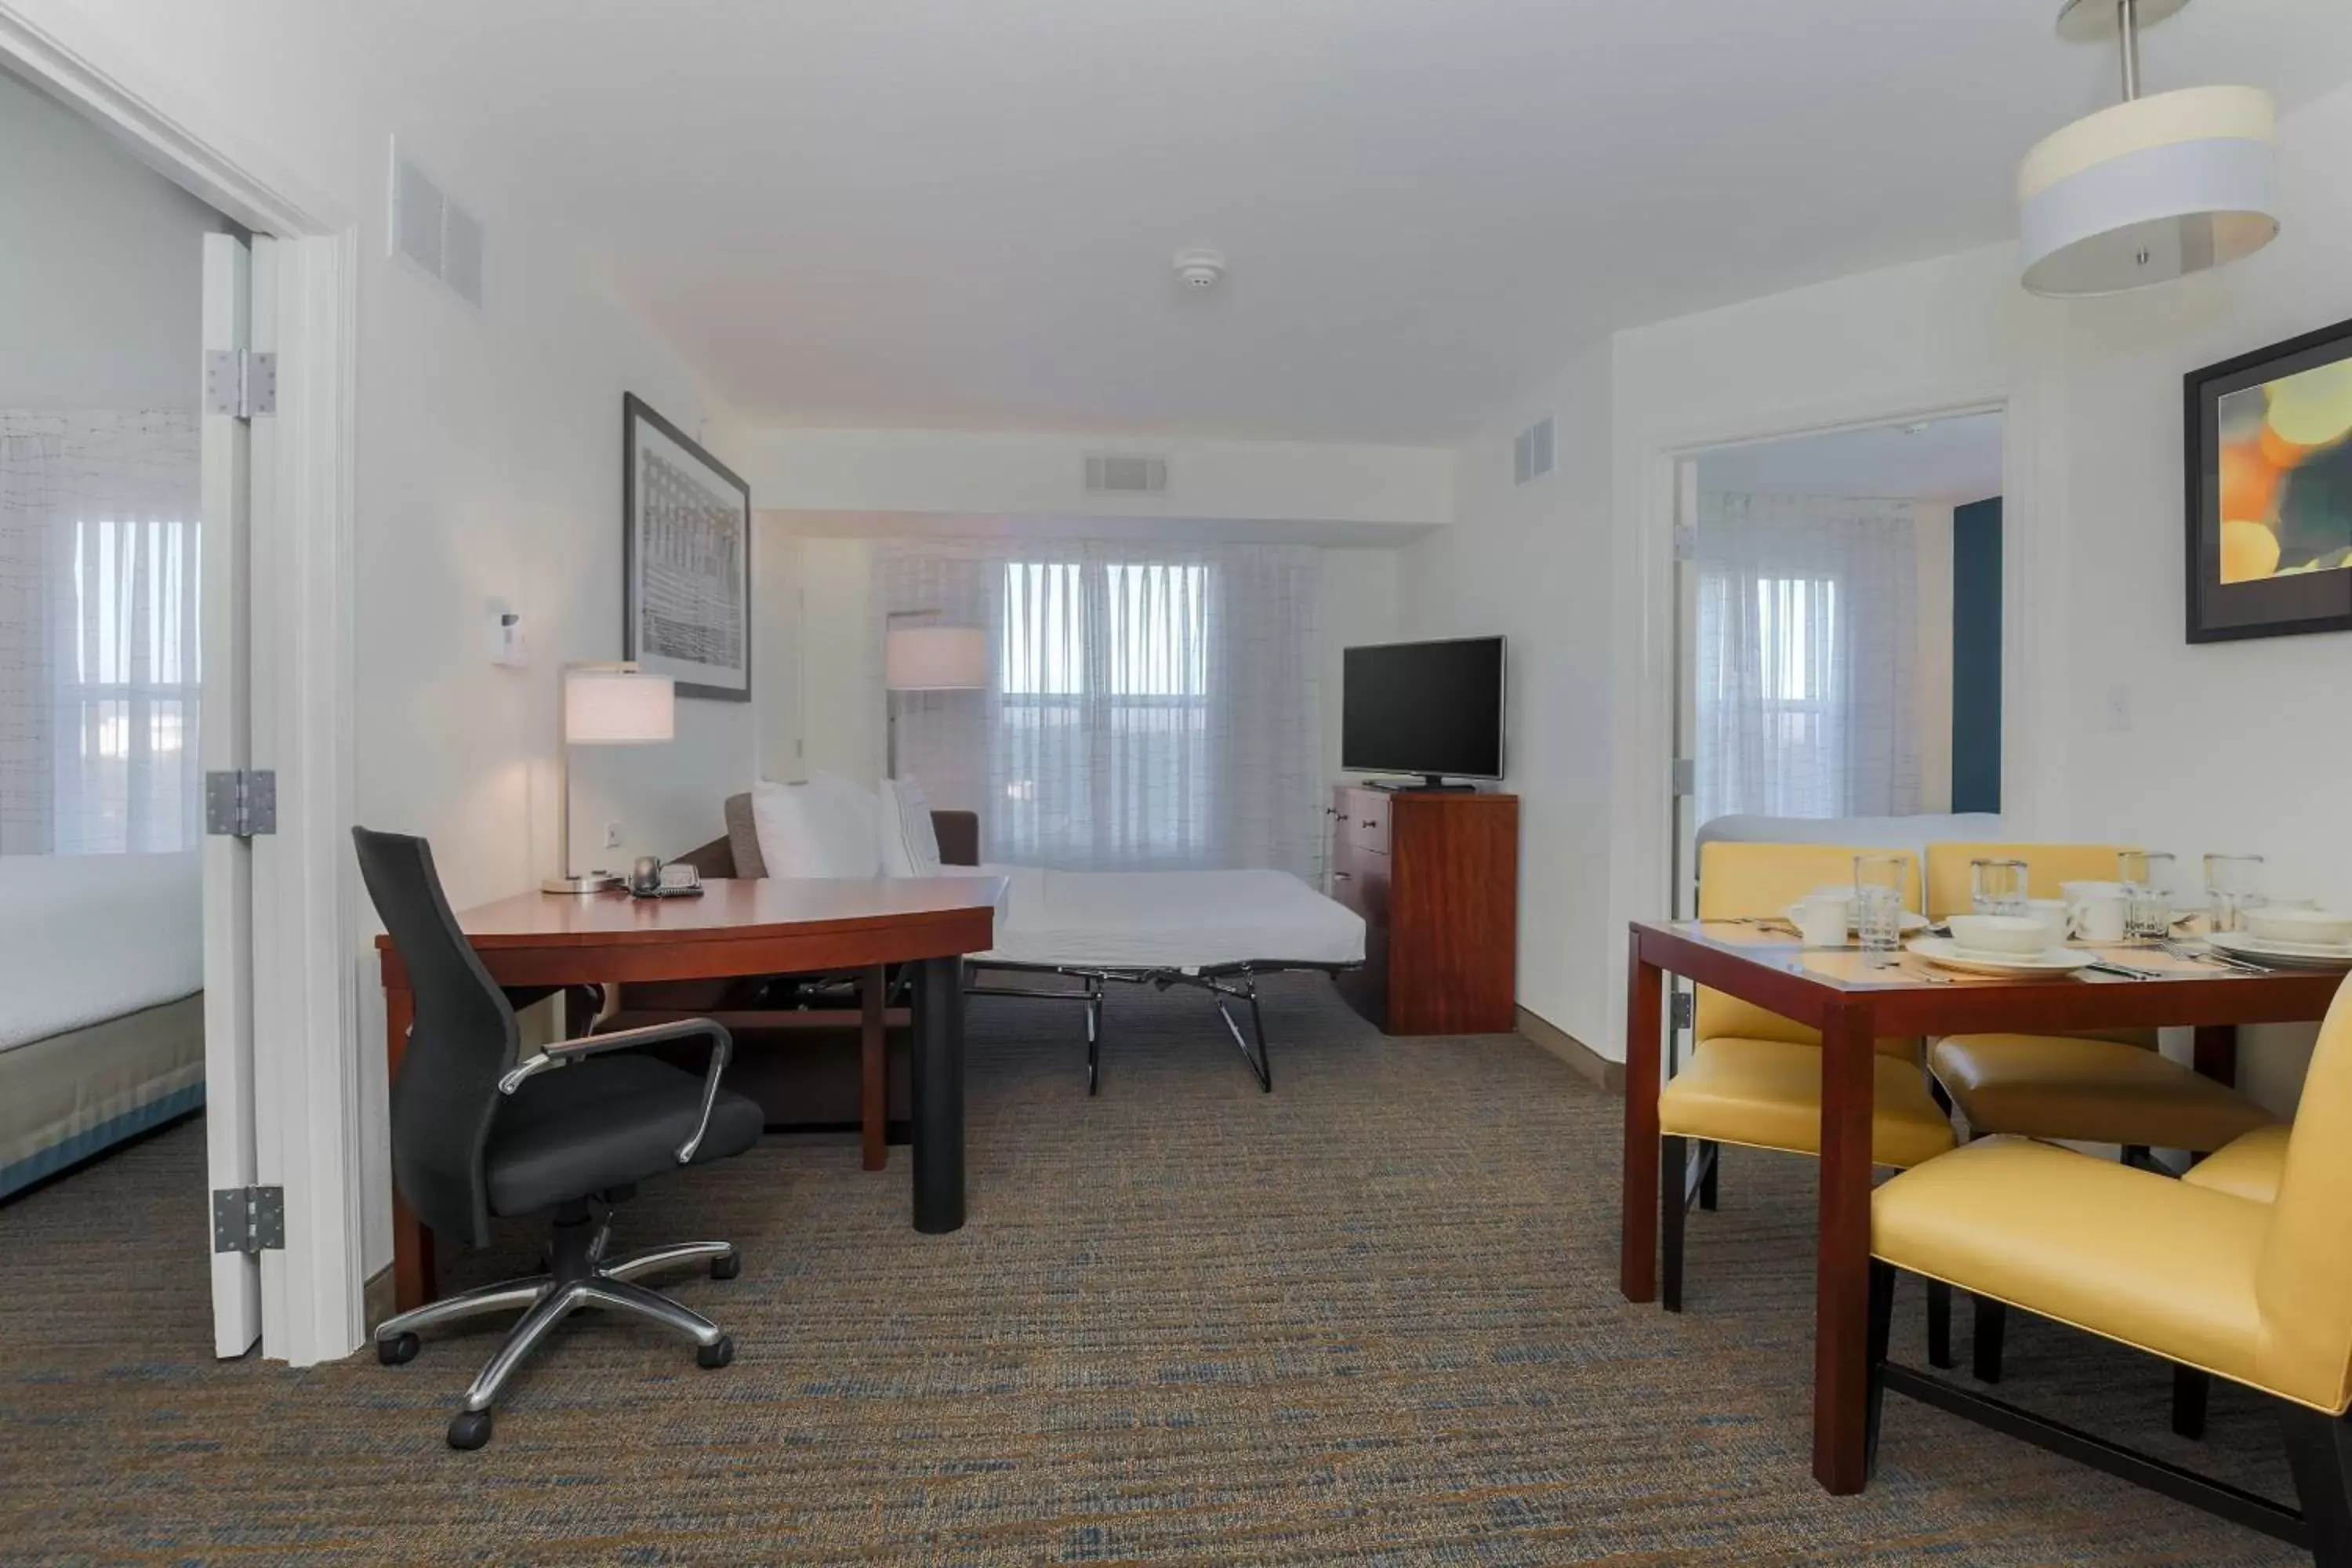 Bedroom, Dining Area in Residence Inn by Marriott Arlington South